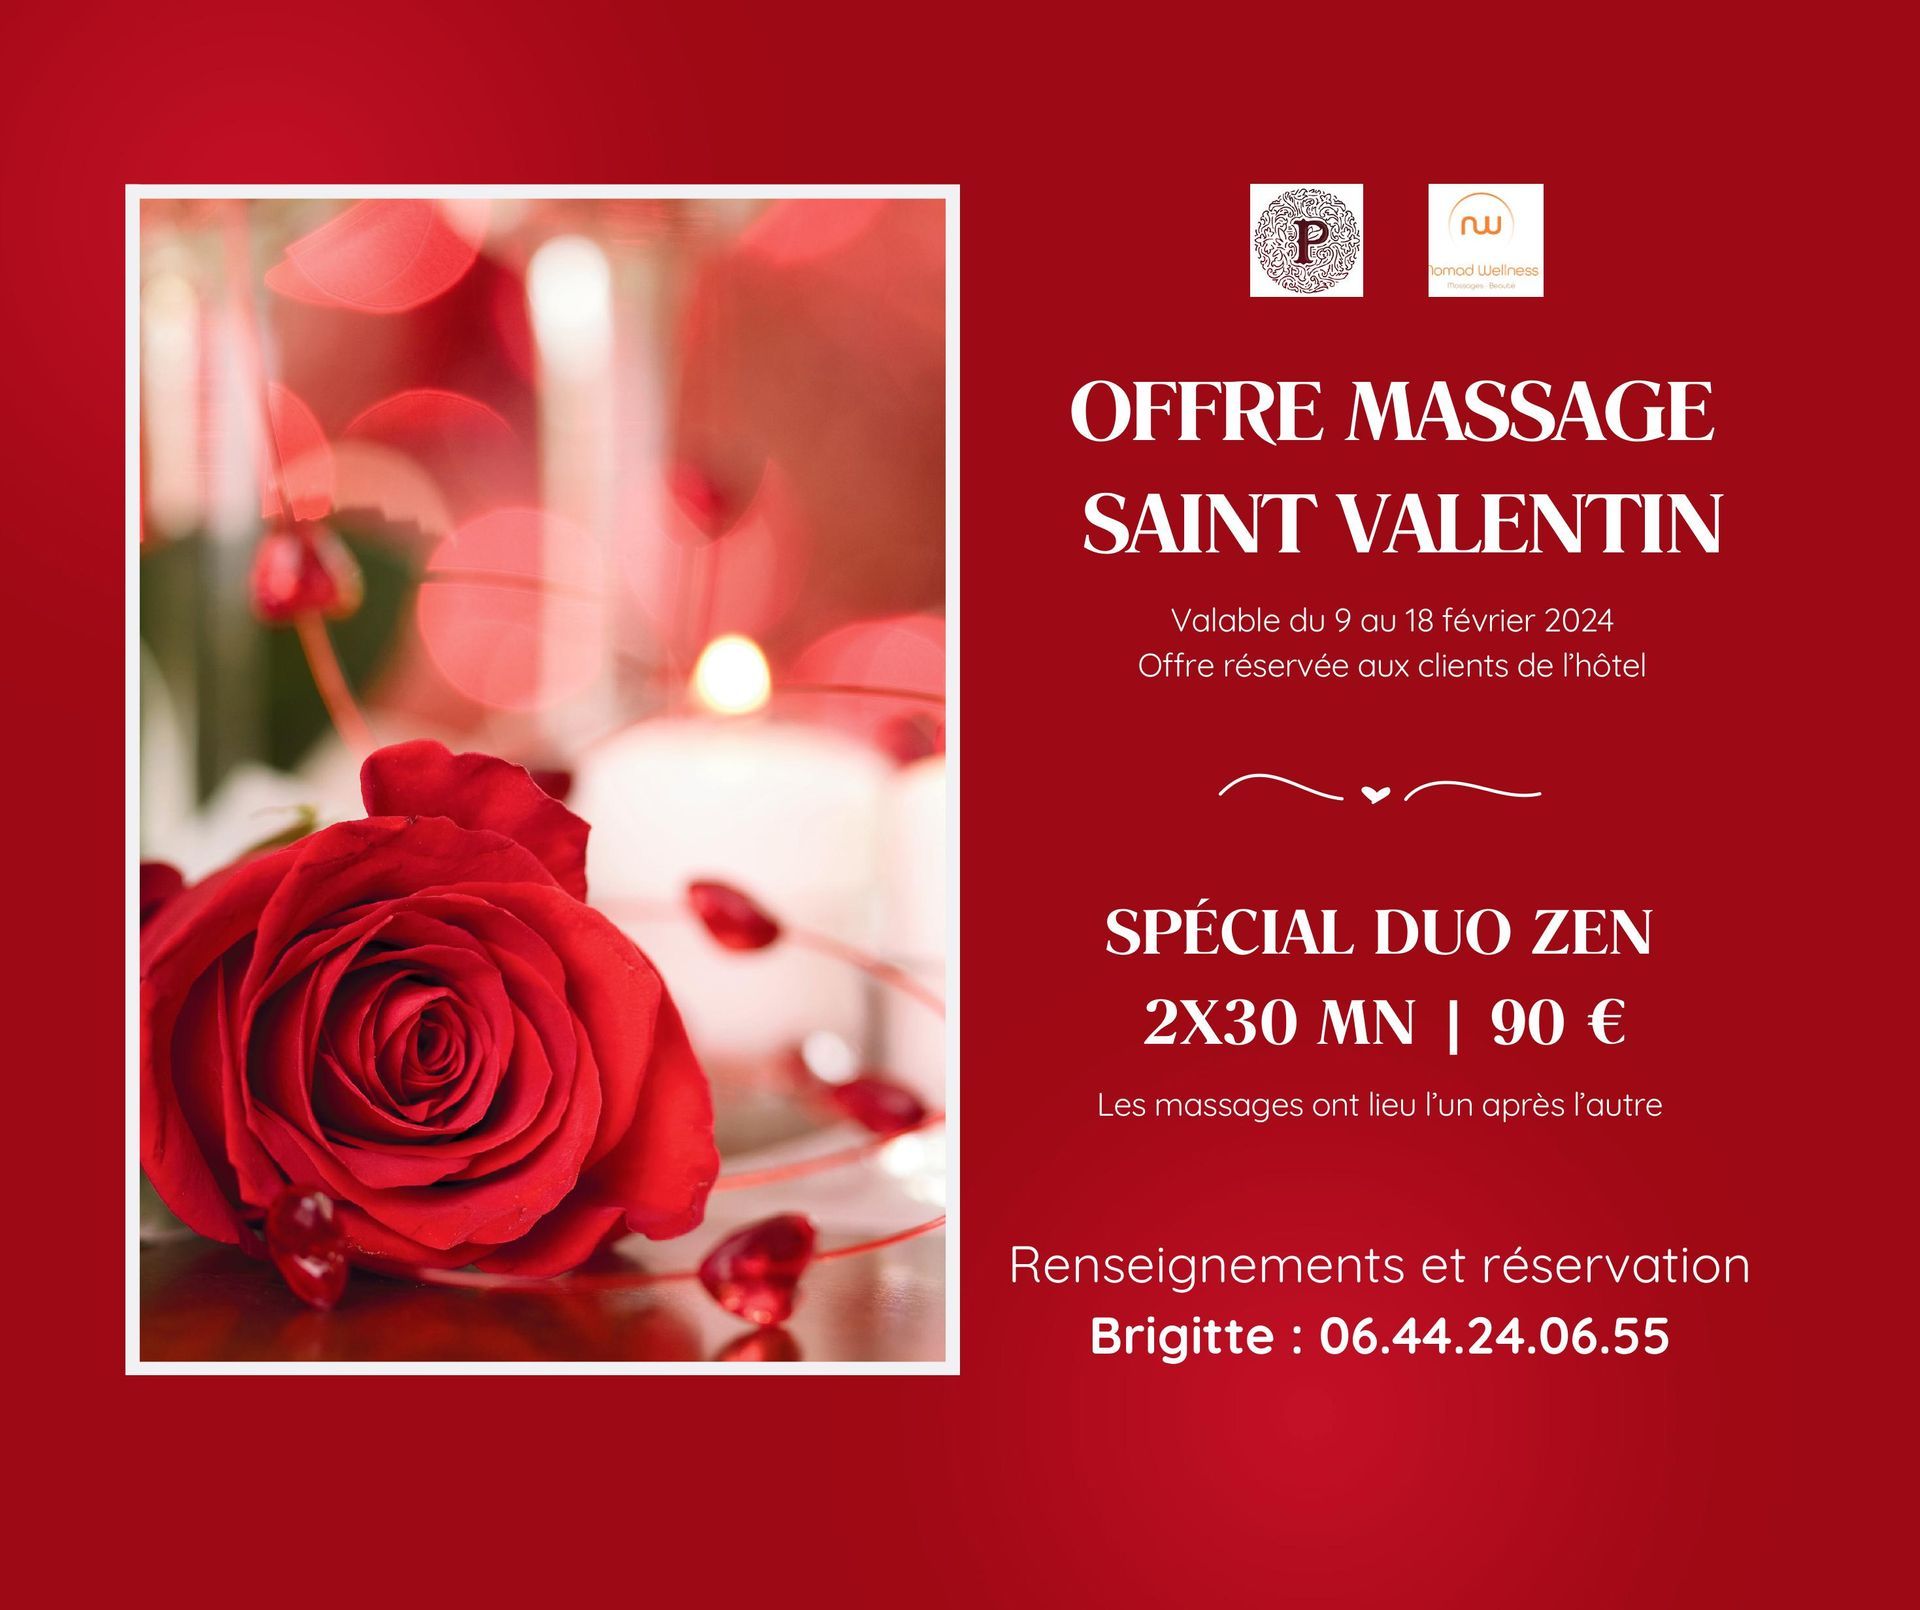 Special romantic Valentine's Day offer in Strasbourg